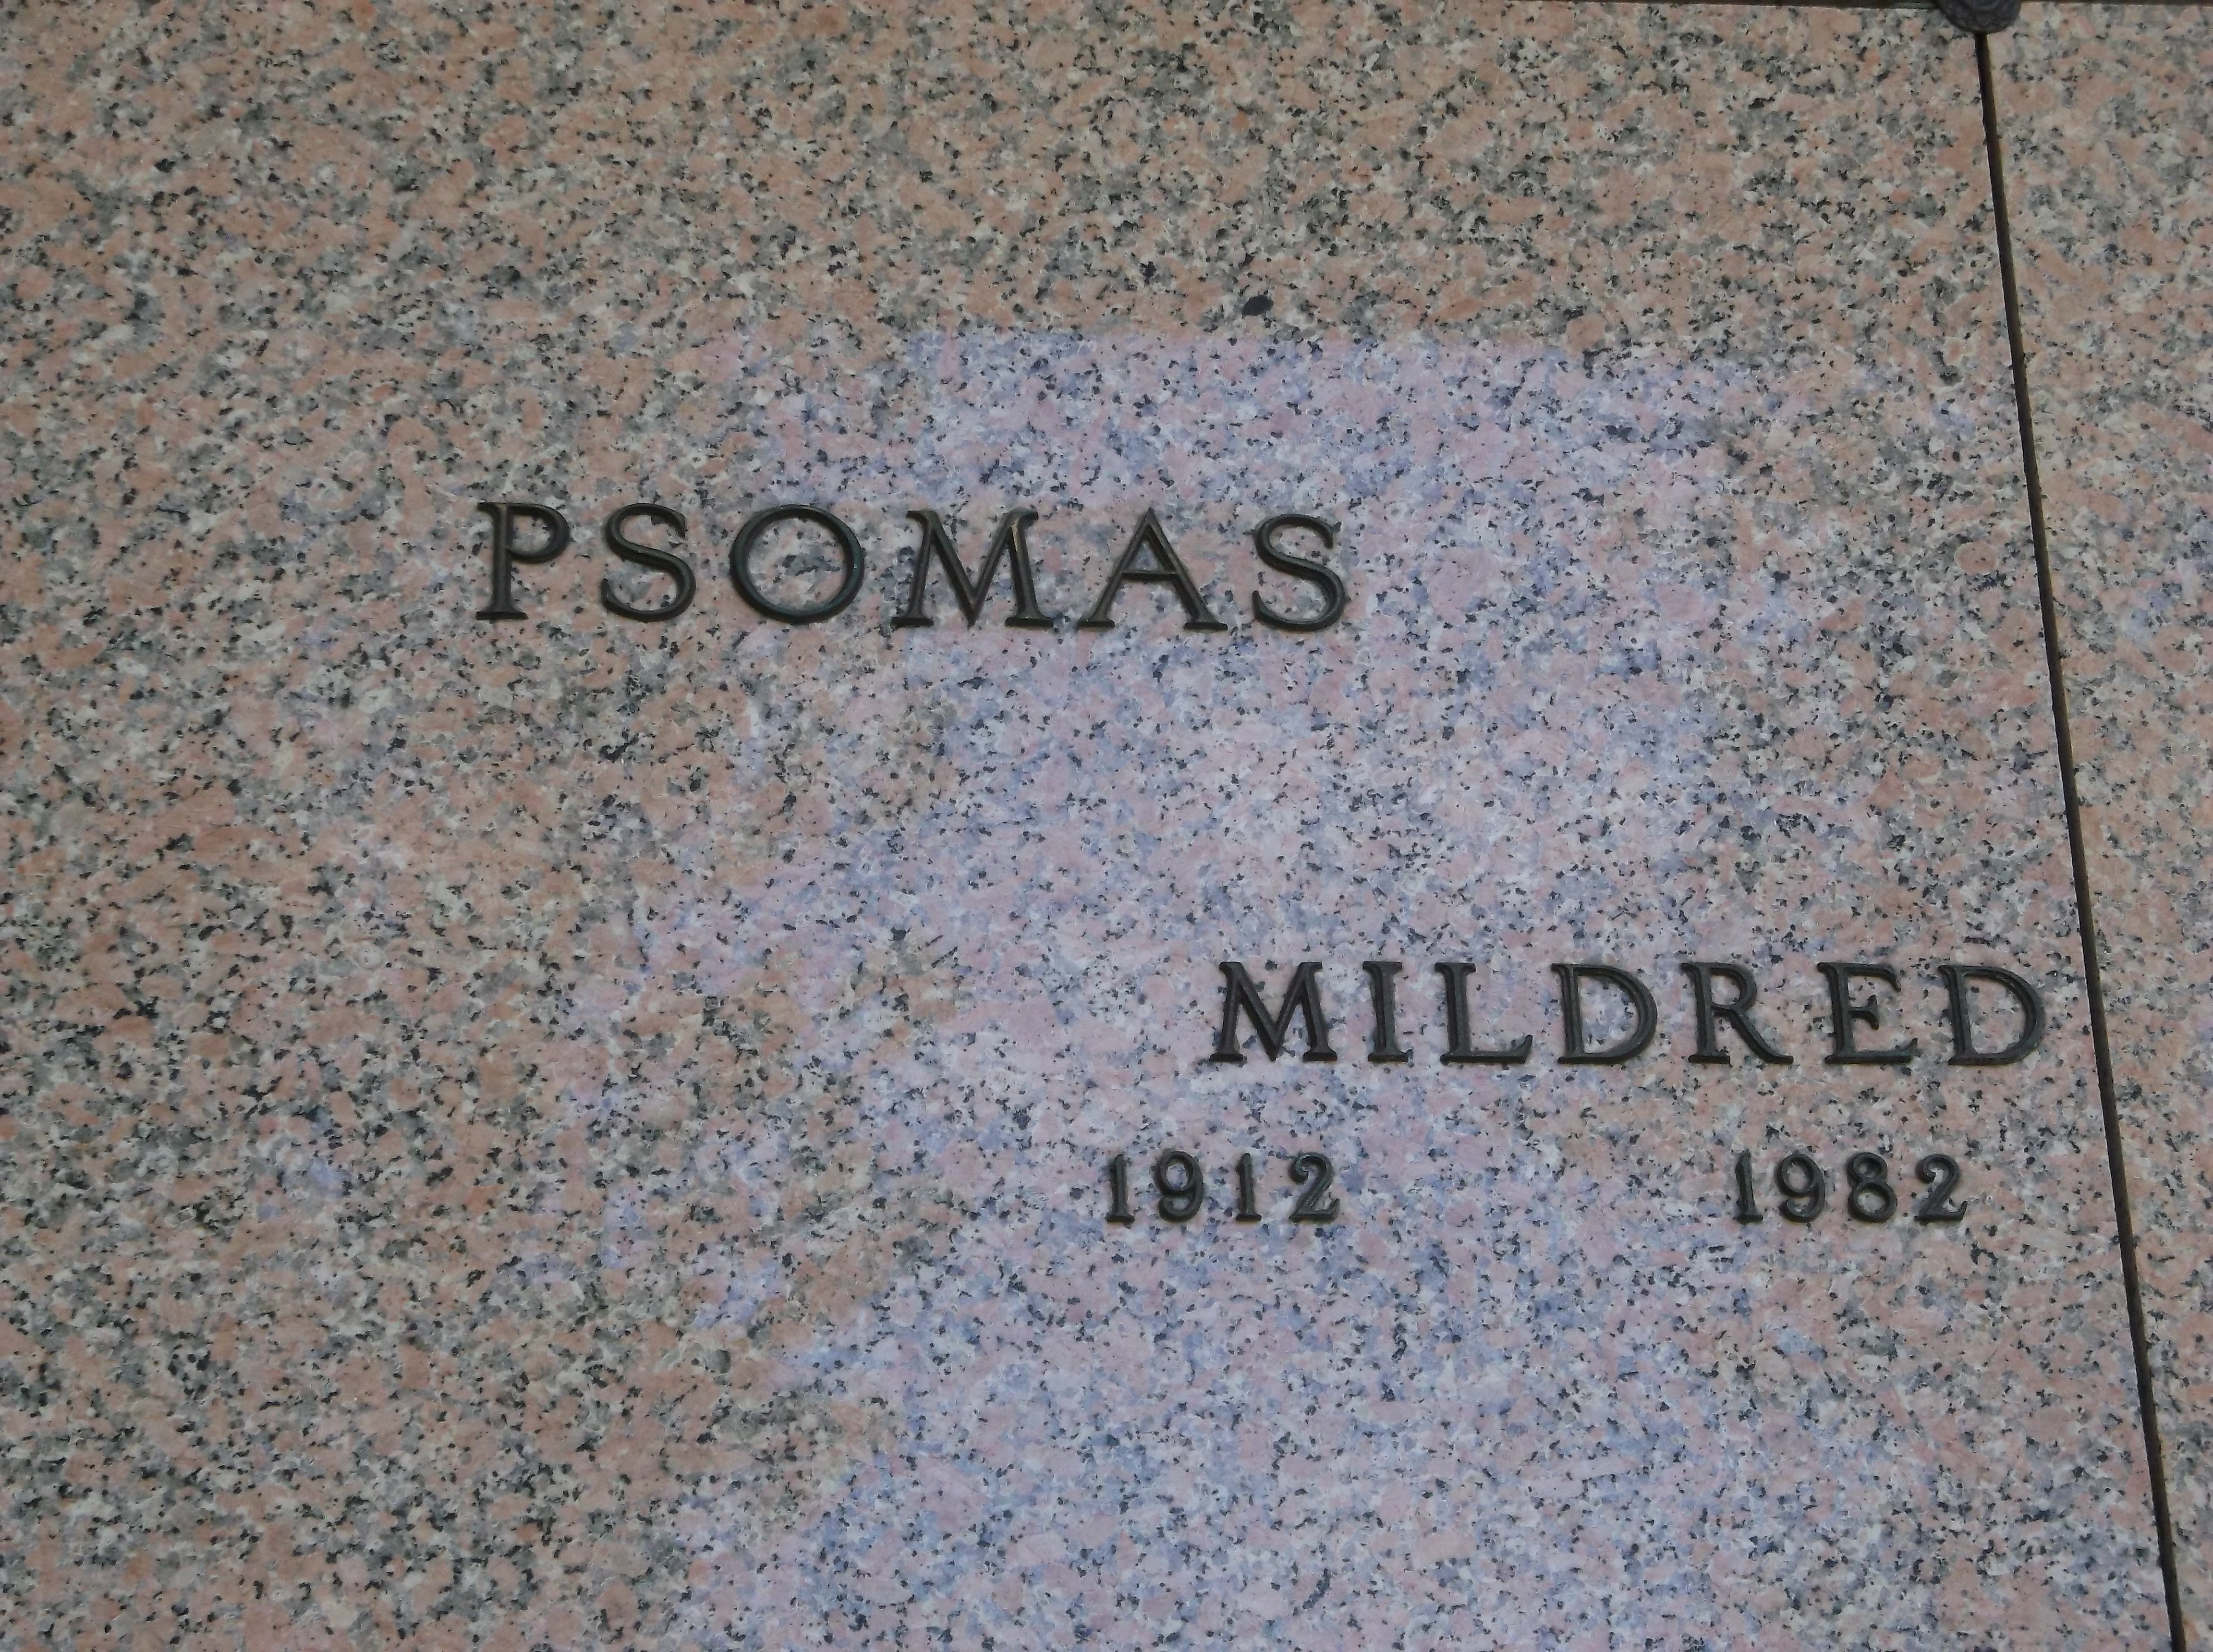 Mildred Psomas